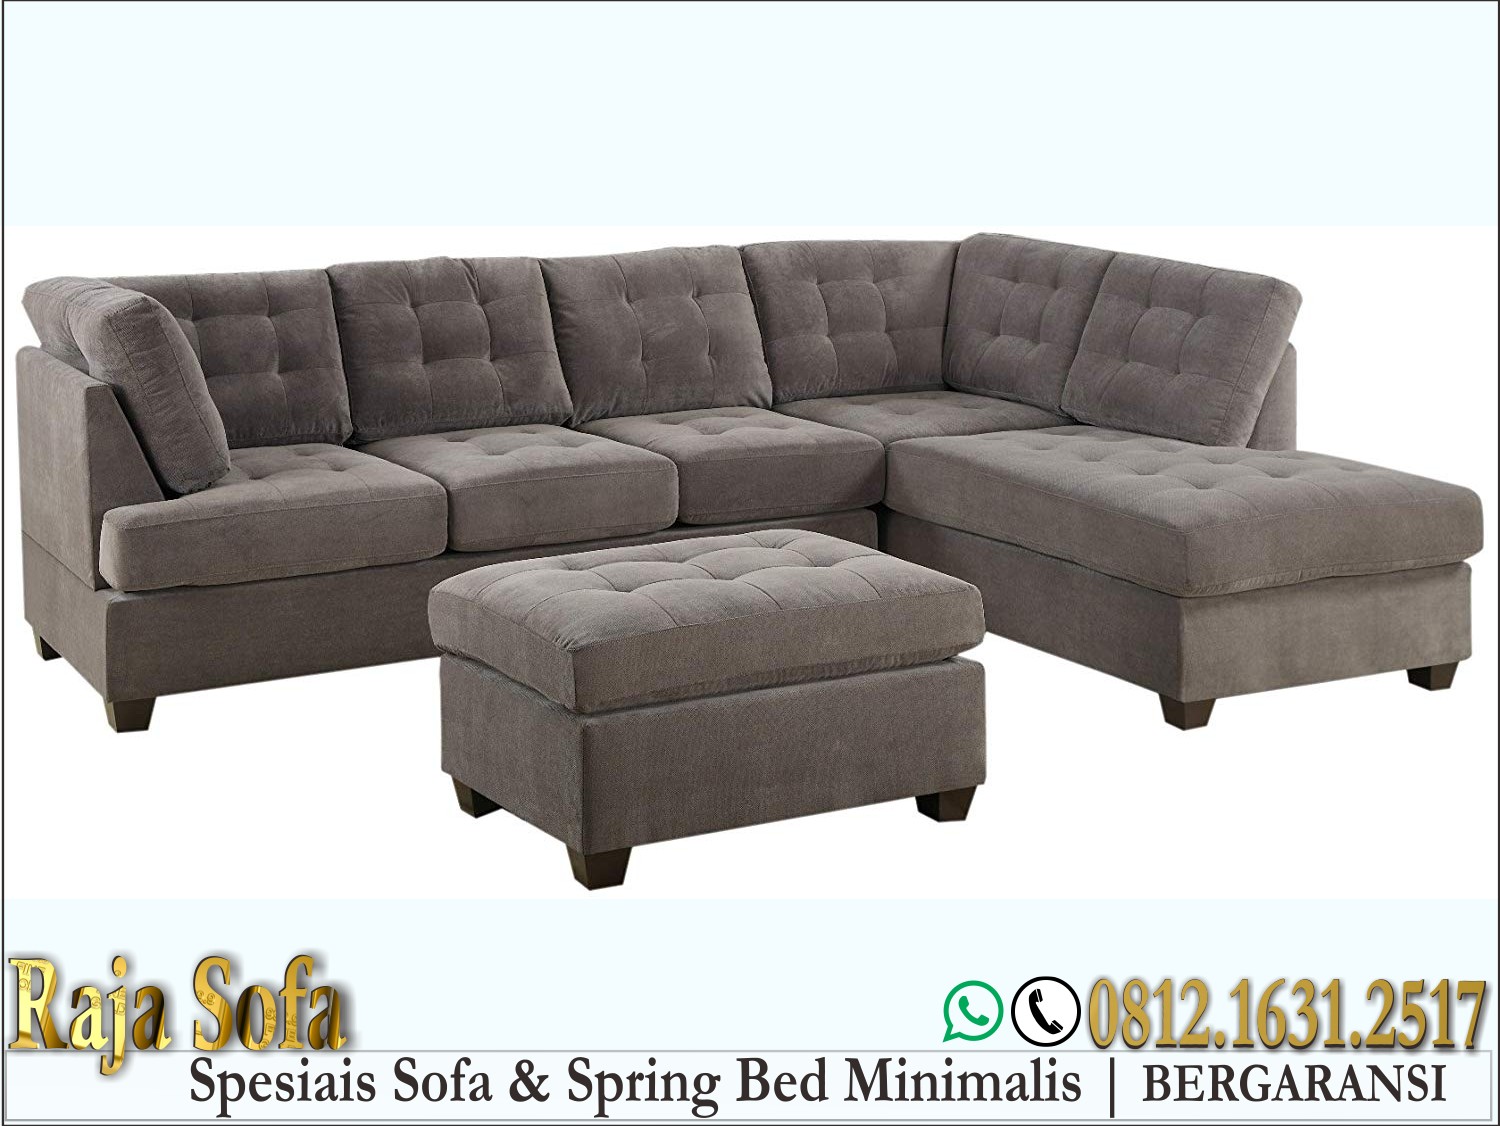  Sofa  Bentuk  L  Minimalis Cuci sofa  bed minimalis